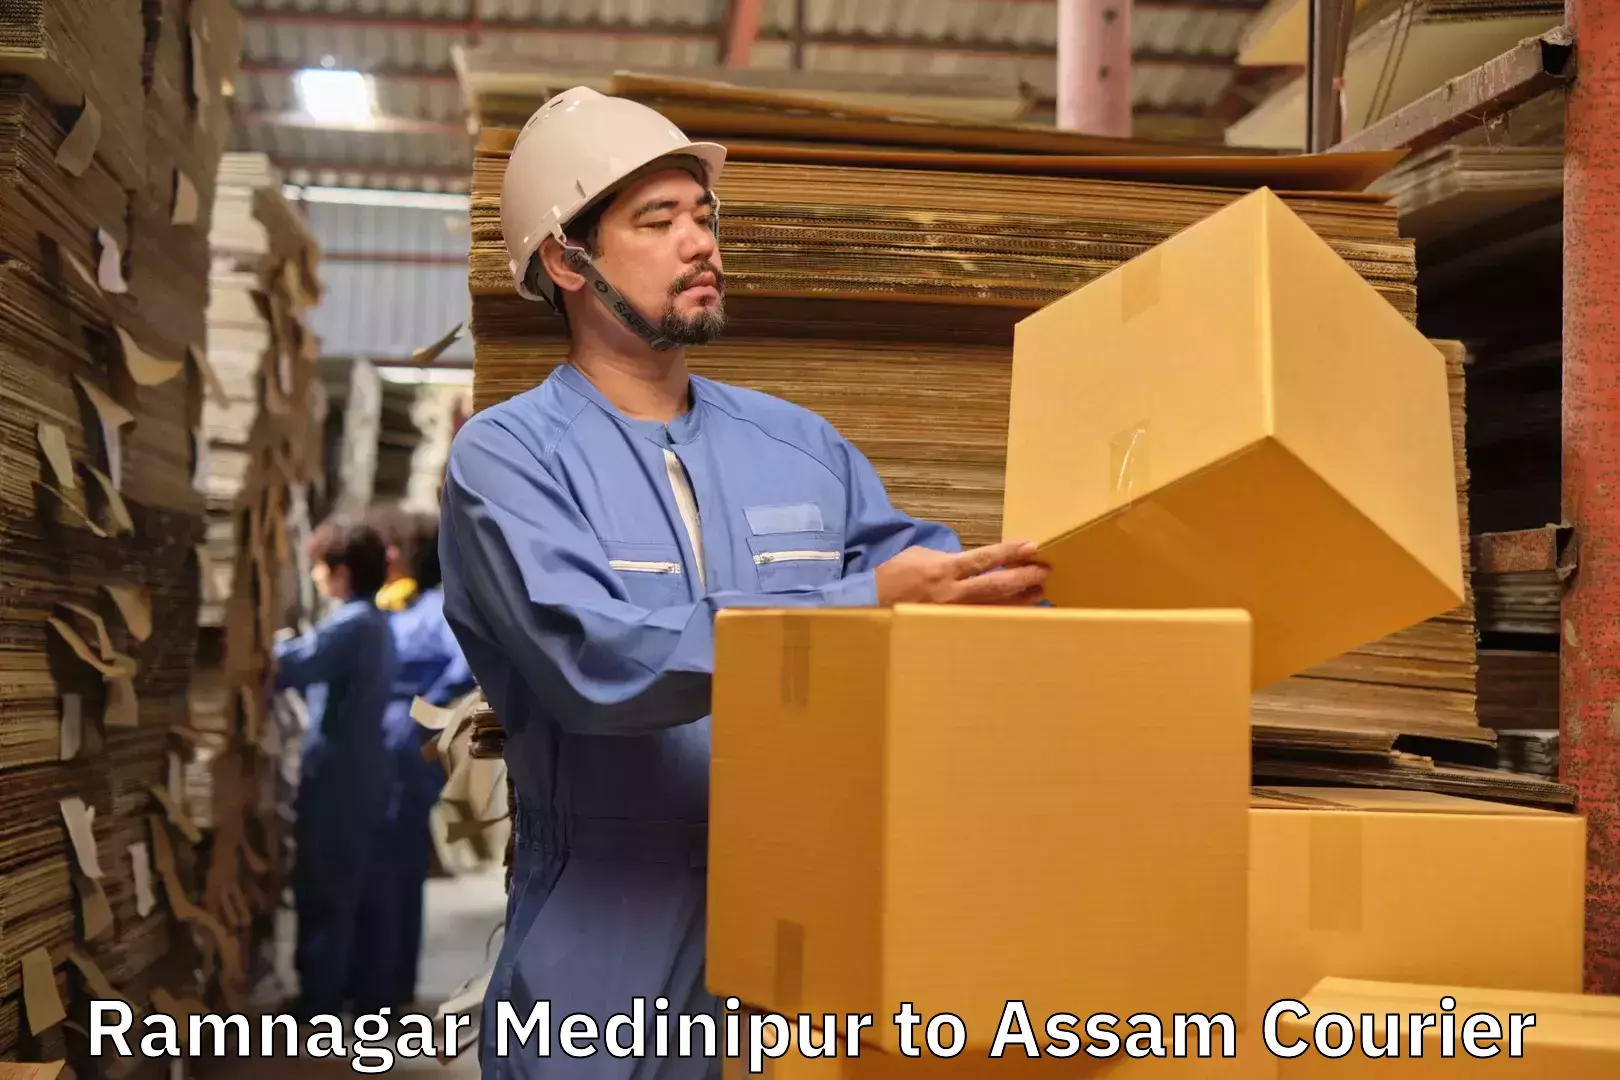 Baggage delivery technology Ramnagar Medinipur to Marigaon